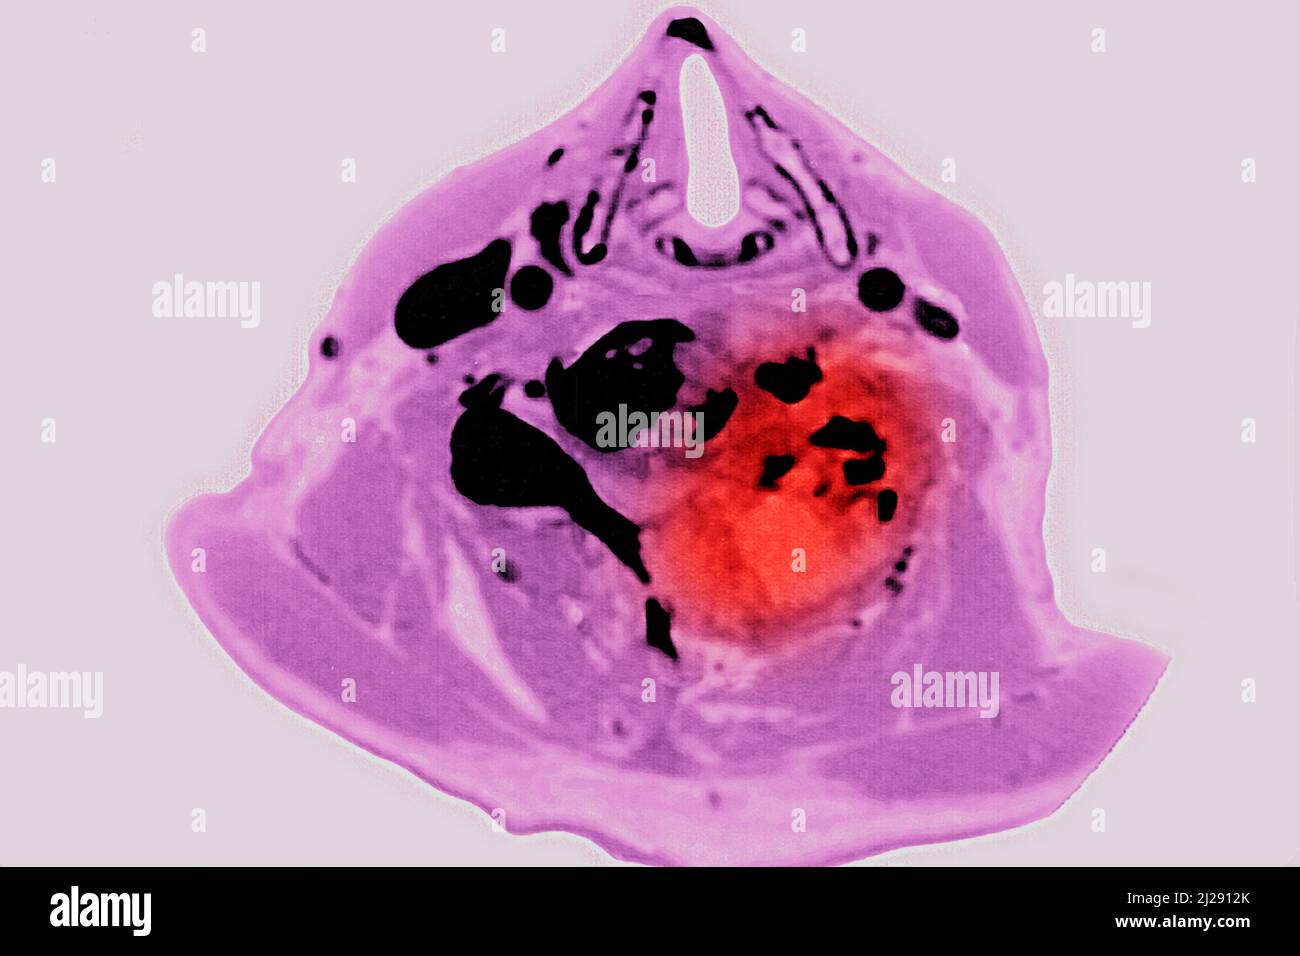 Malignant tumor localized on cervical vertebrae Stock Photo